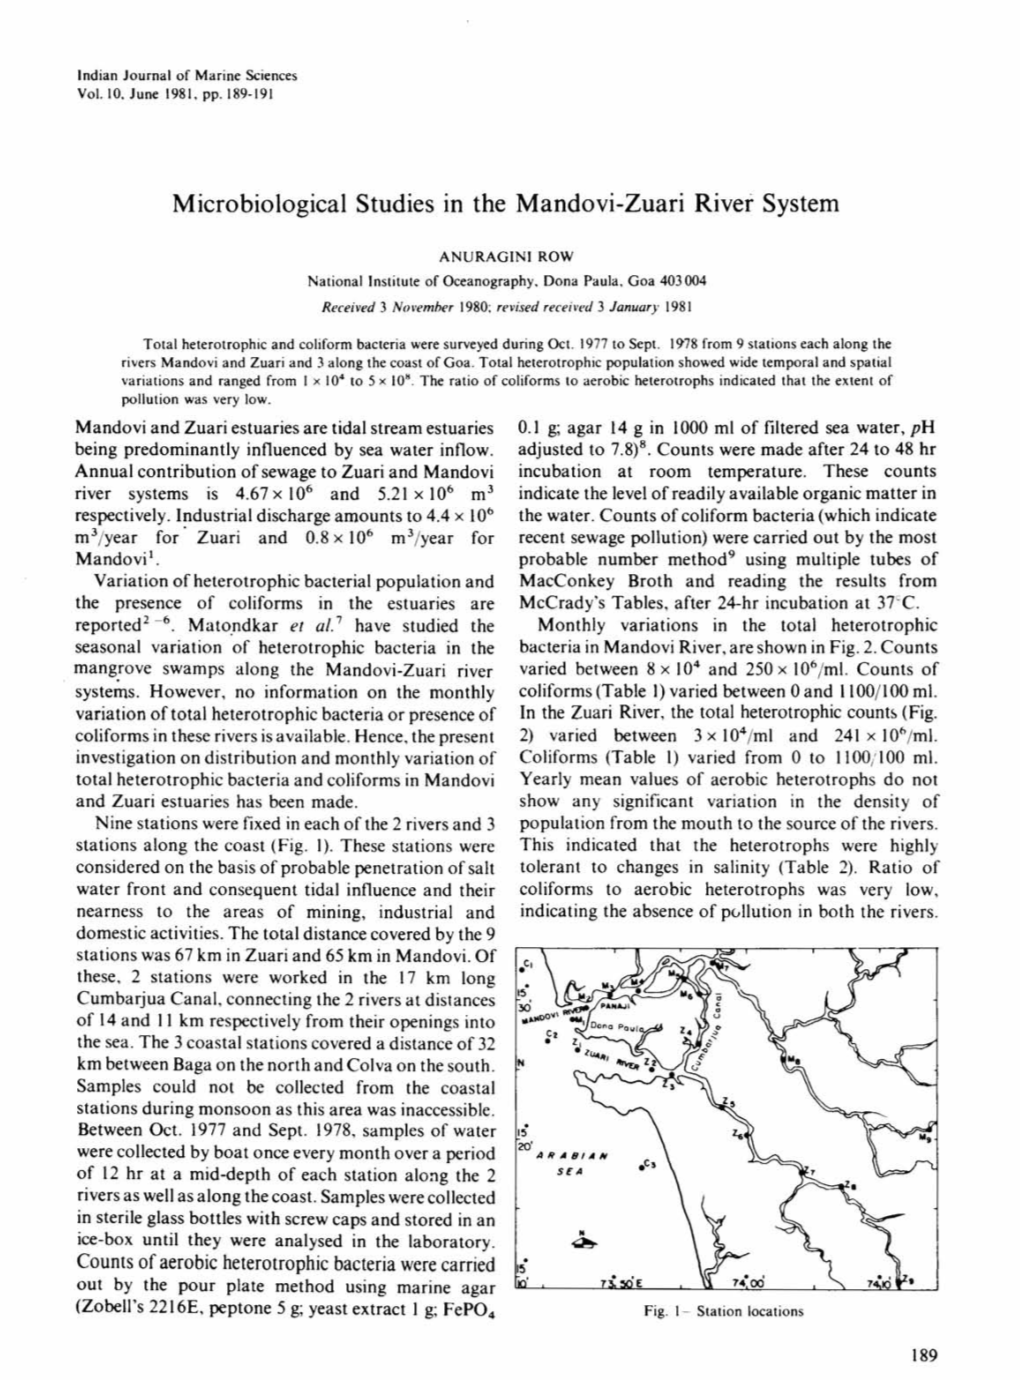 Microbiological Studies in the Mandovi-Zuari River System